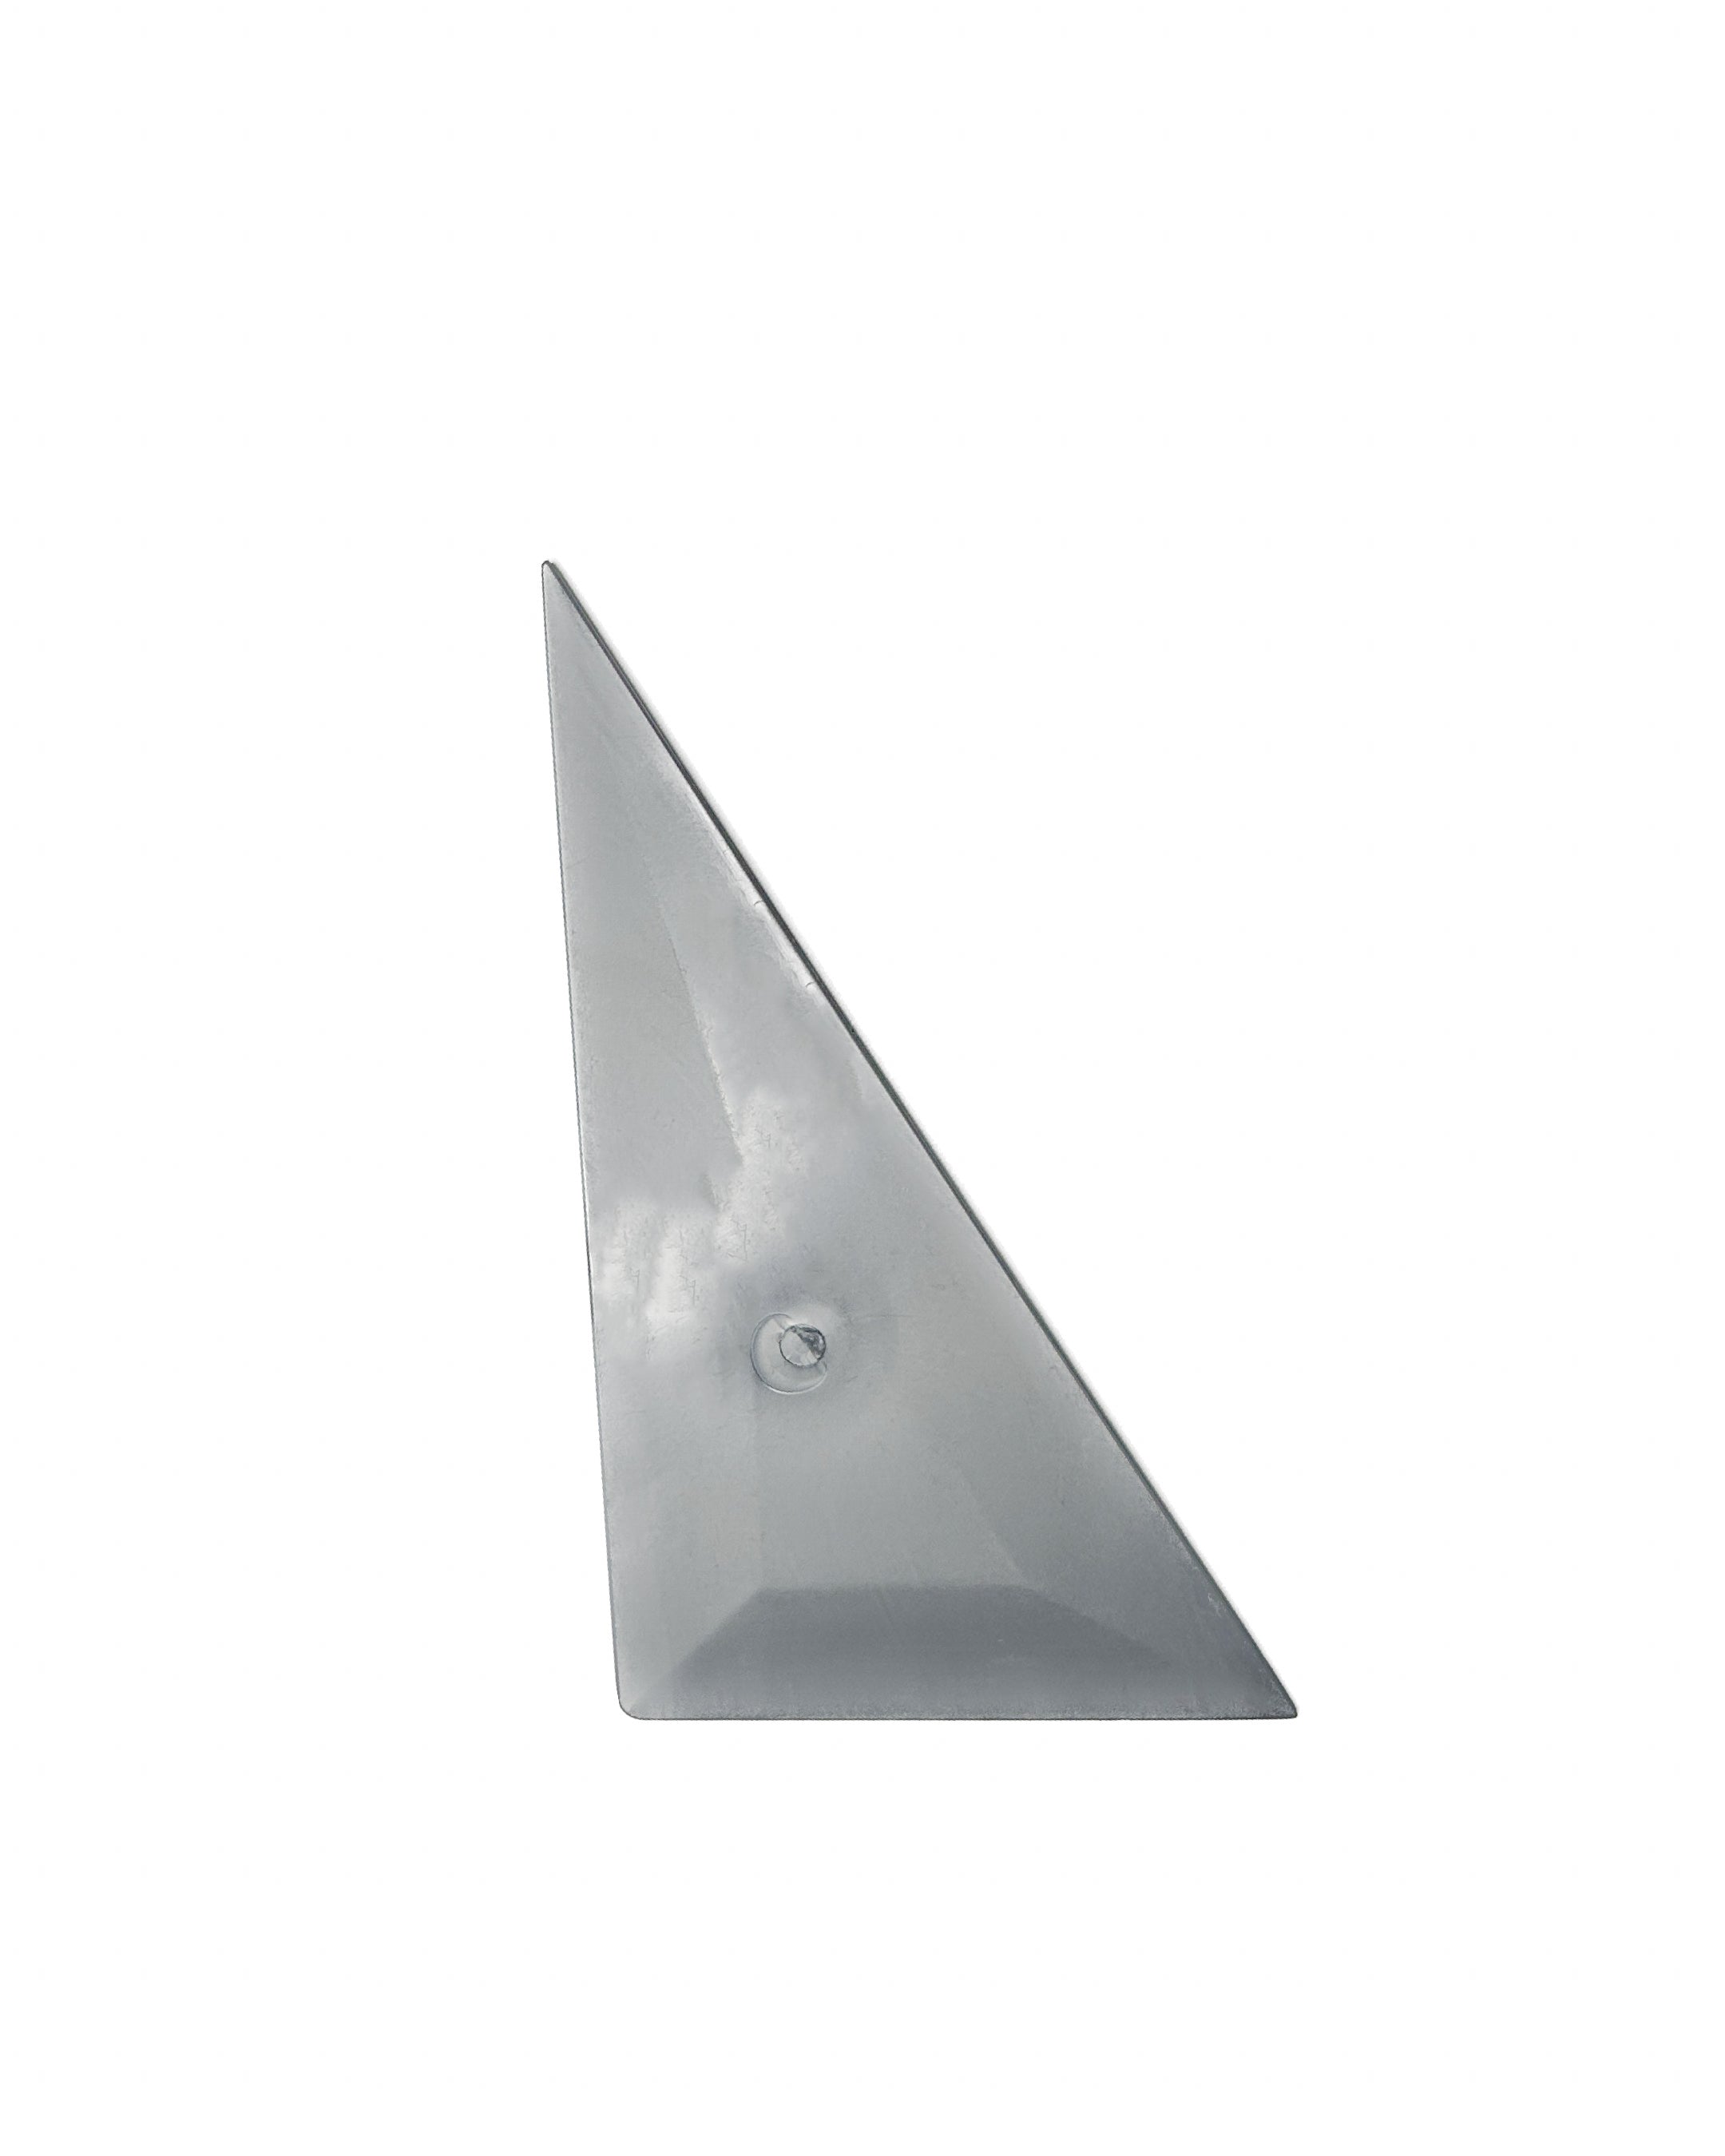 Grey Triangle Angled Hard Card (no brand)